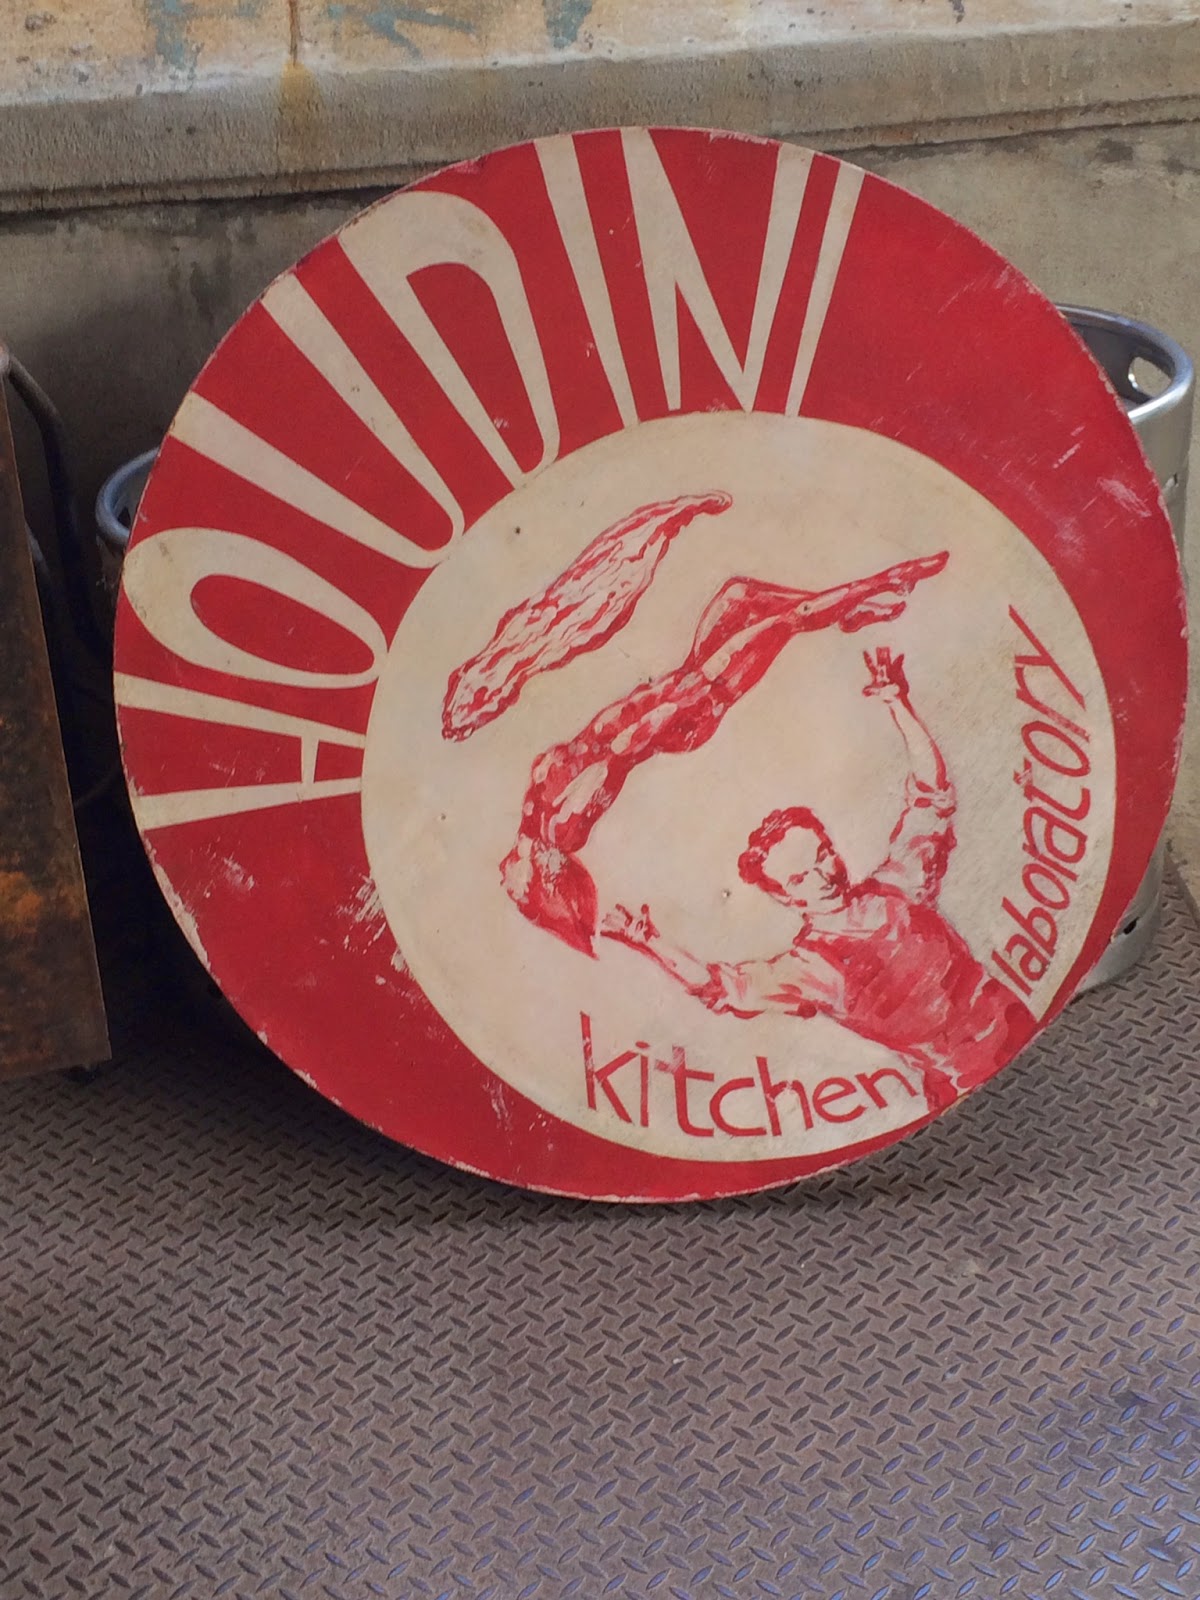 Photo of Houdini Kitchen Laboratory in Ridgewood City, New York, United States - 10 Picture of Restaurant, Food, Point of interest, Establishment